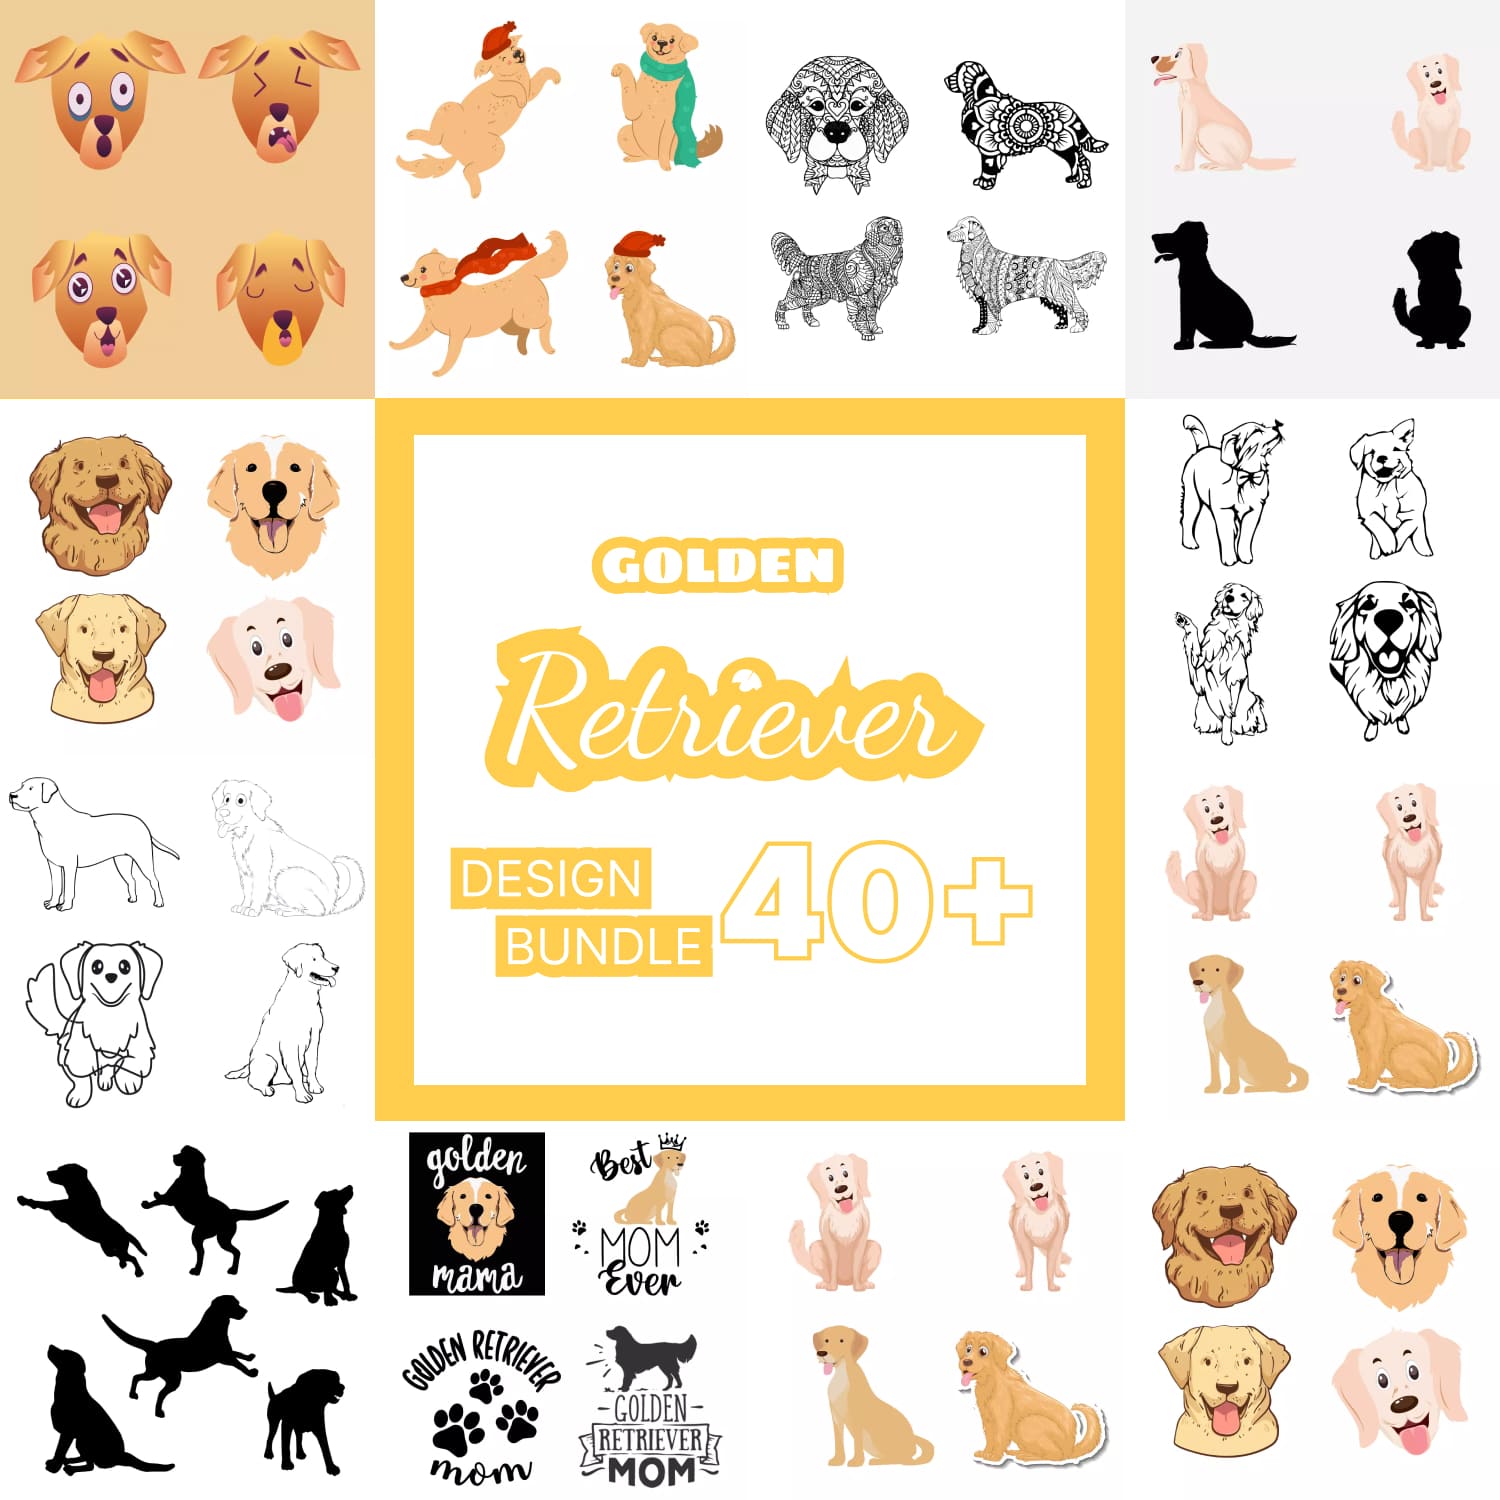 Golden Retriever SVG Designs Bundle - main image preview.